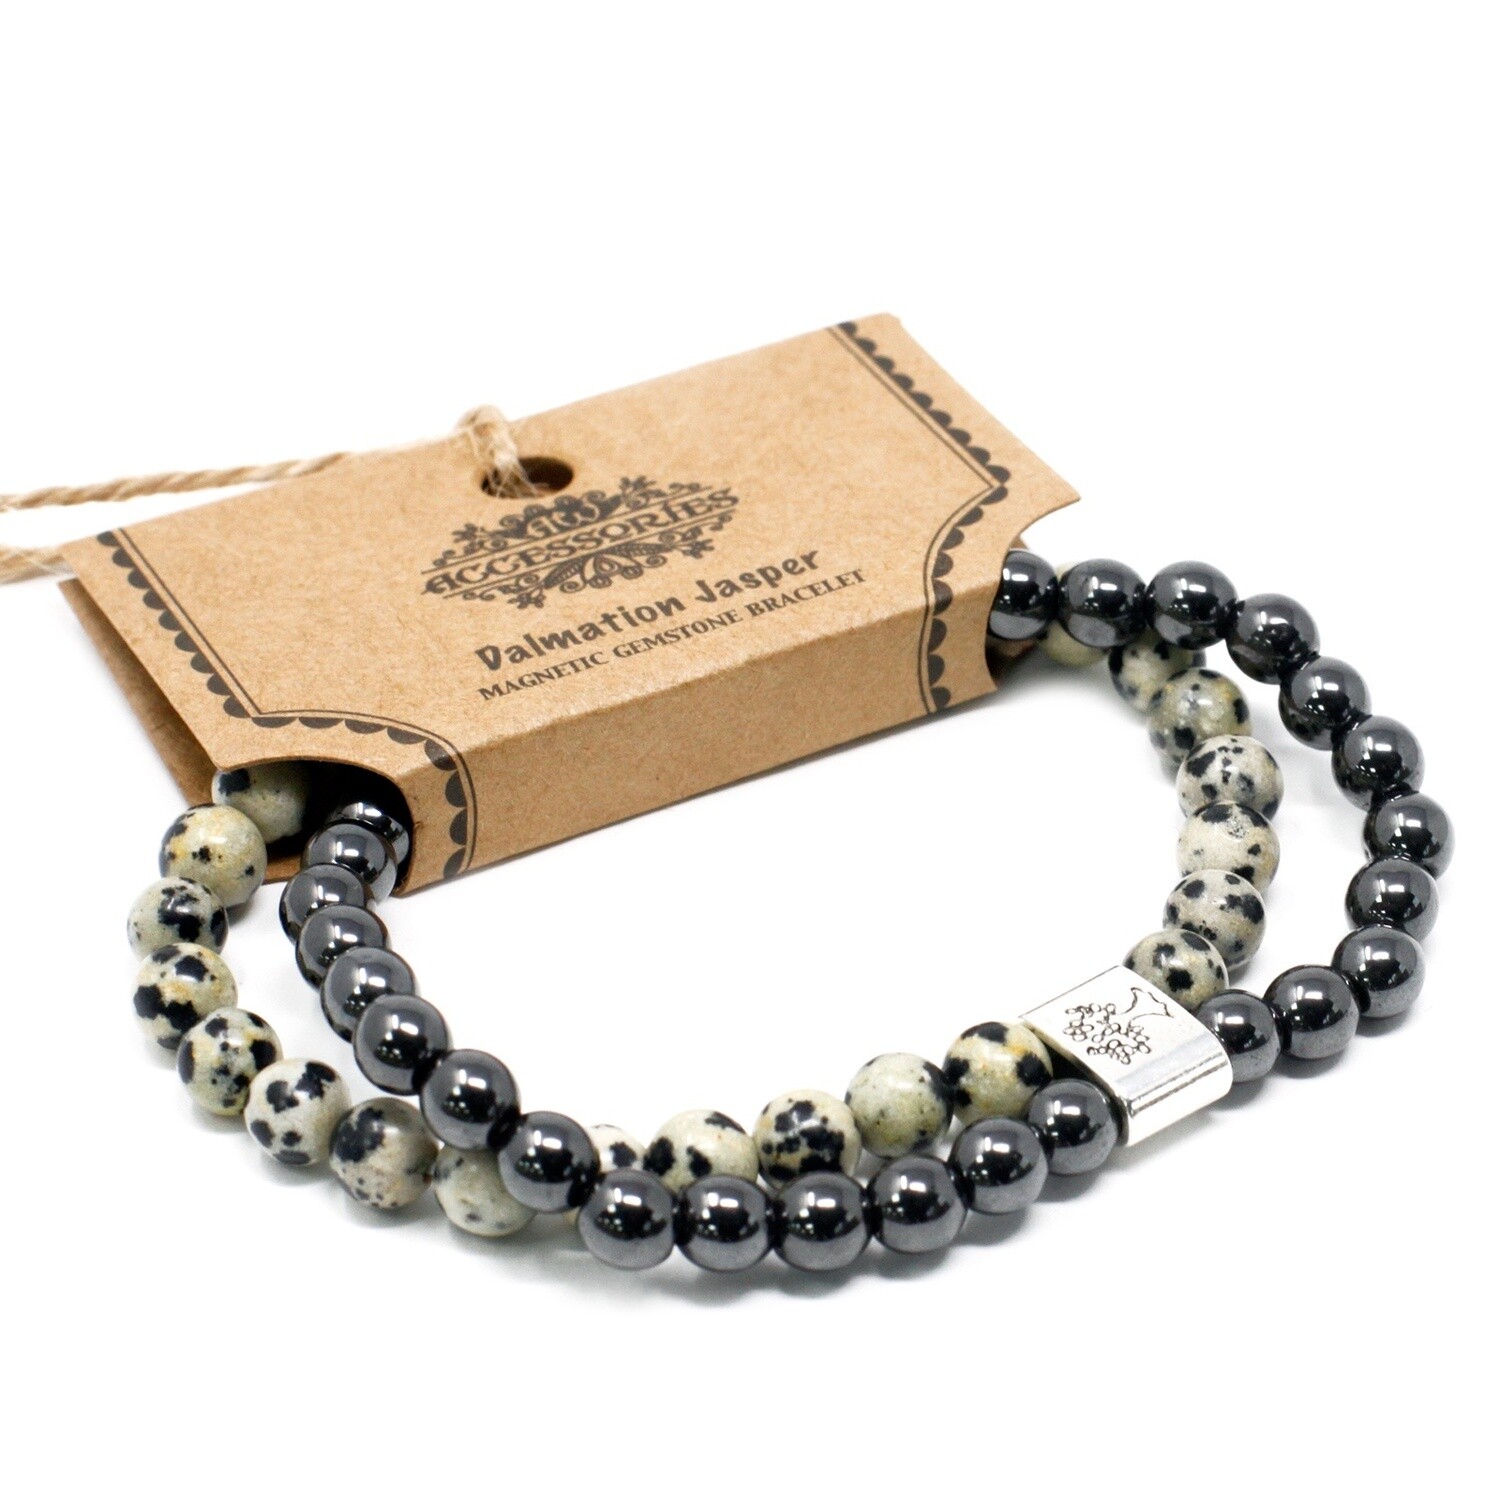 6mm Dalmatian Jasper and Magnetic Gemstone Bead Stretch Bracelet